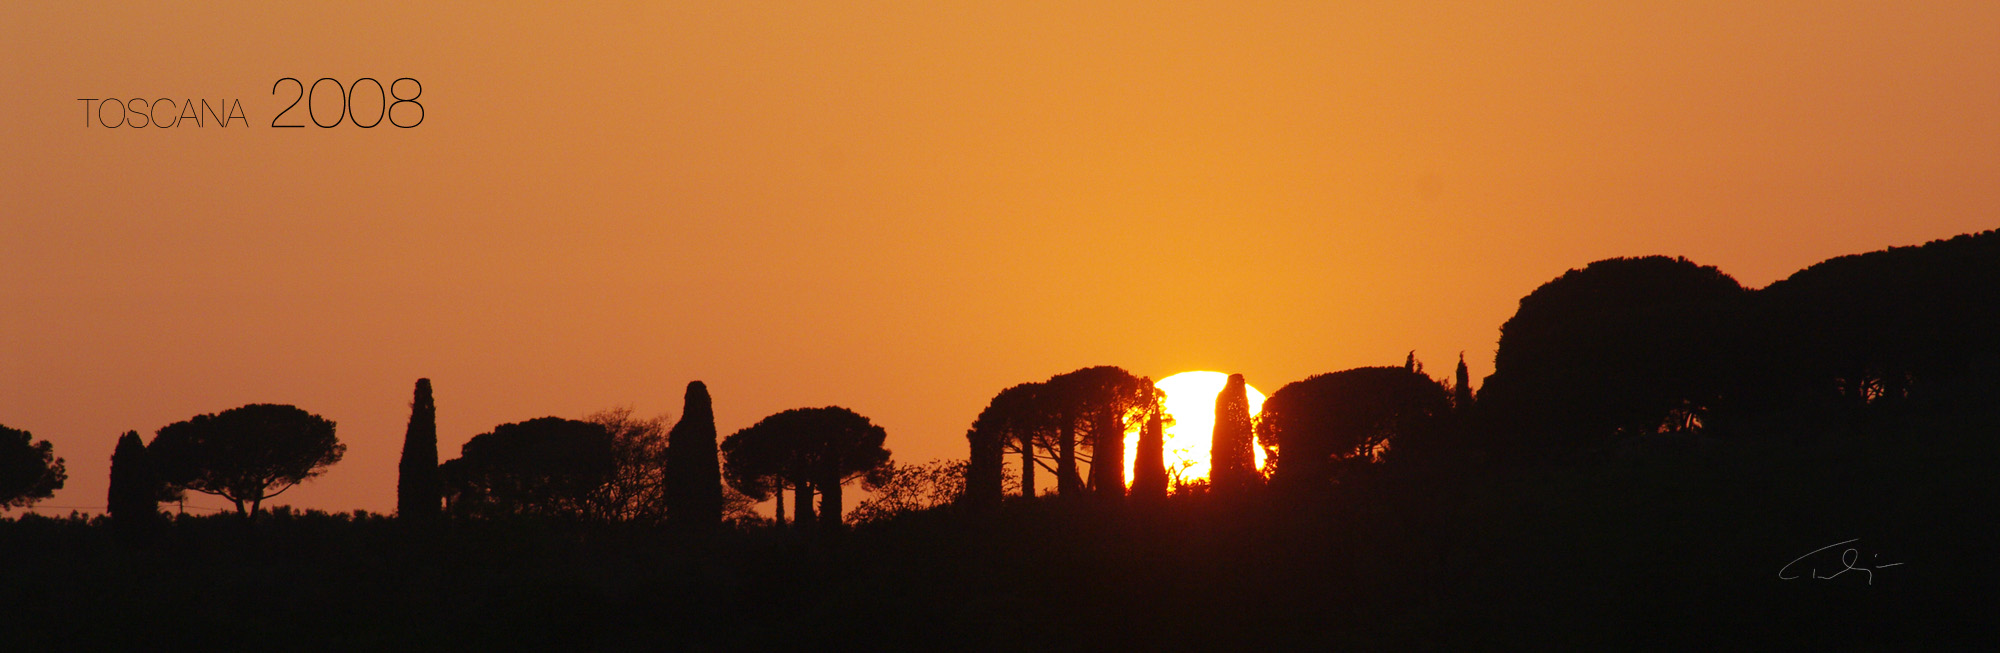 0011_Toscana solnedgong